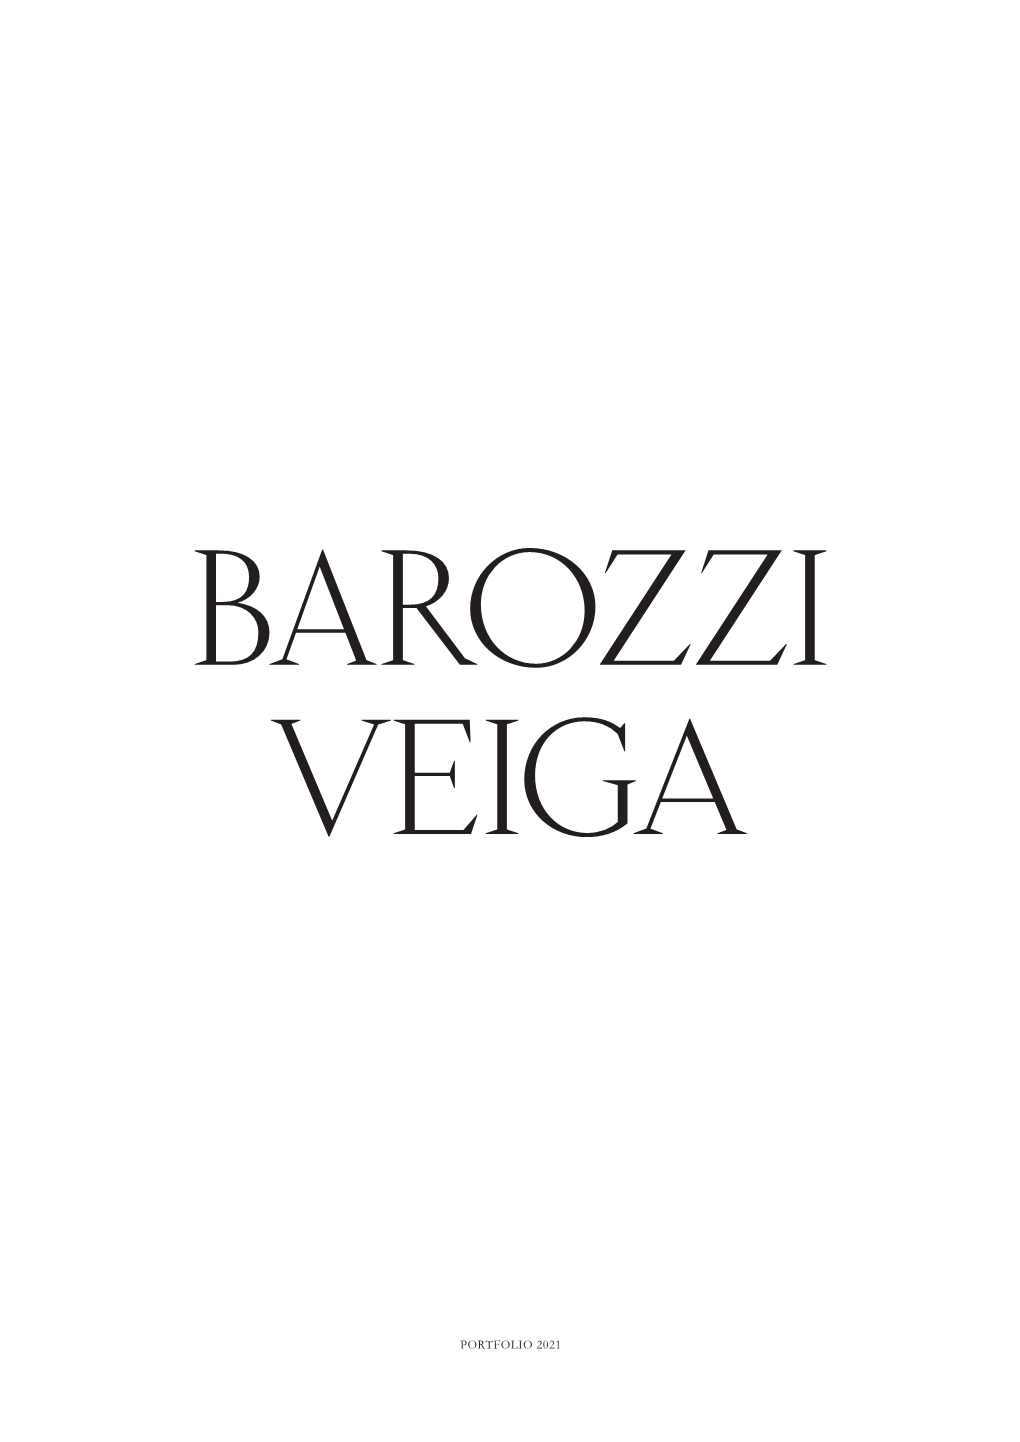 Portfolio 2021 Barozzi Veiga